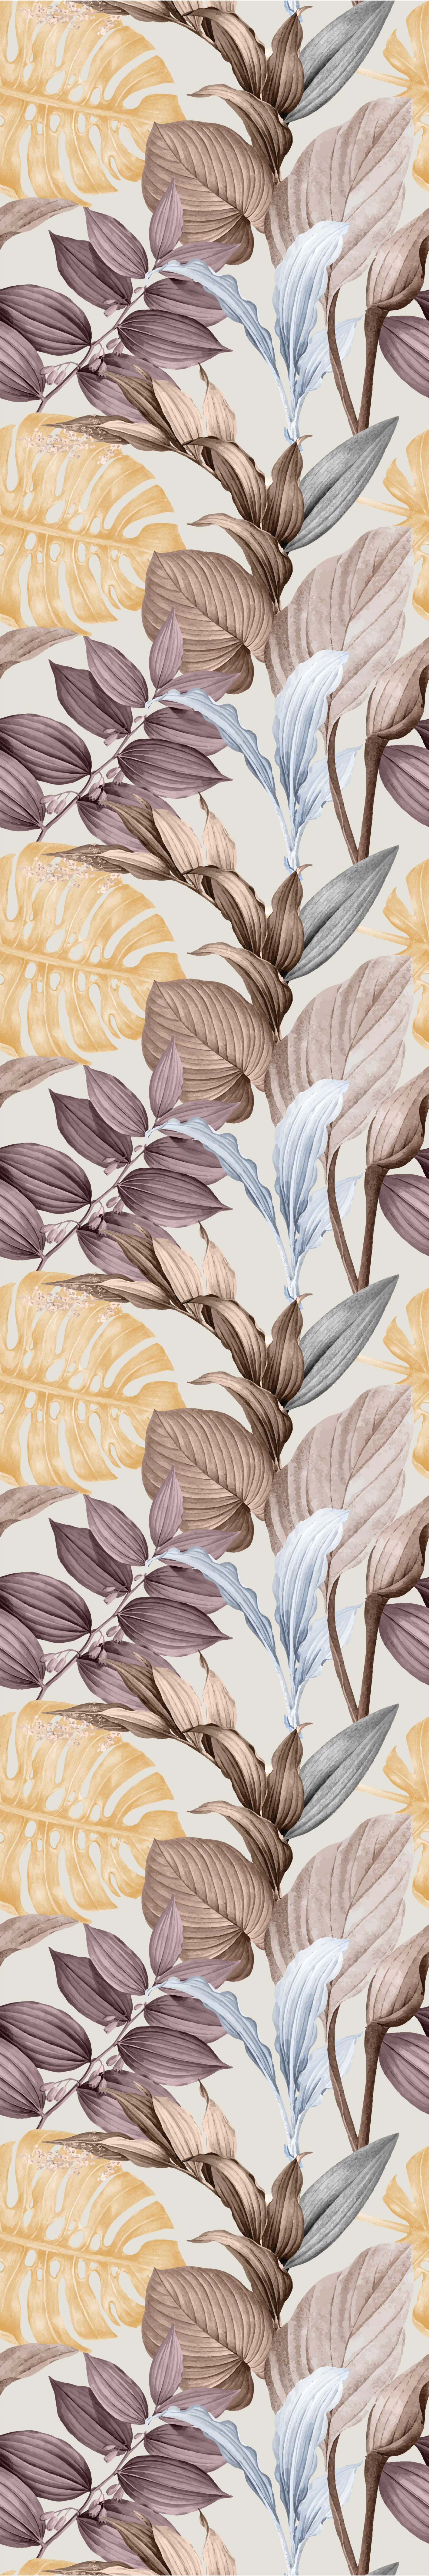 Sticker mural motif plantes tropicales XXL - TenStickers